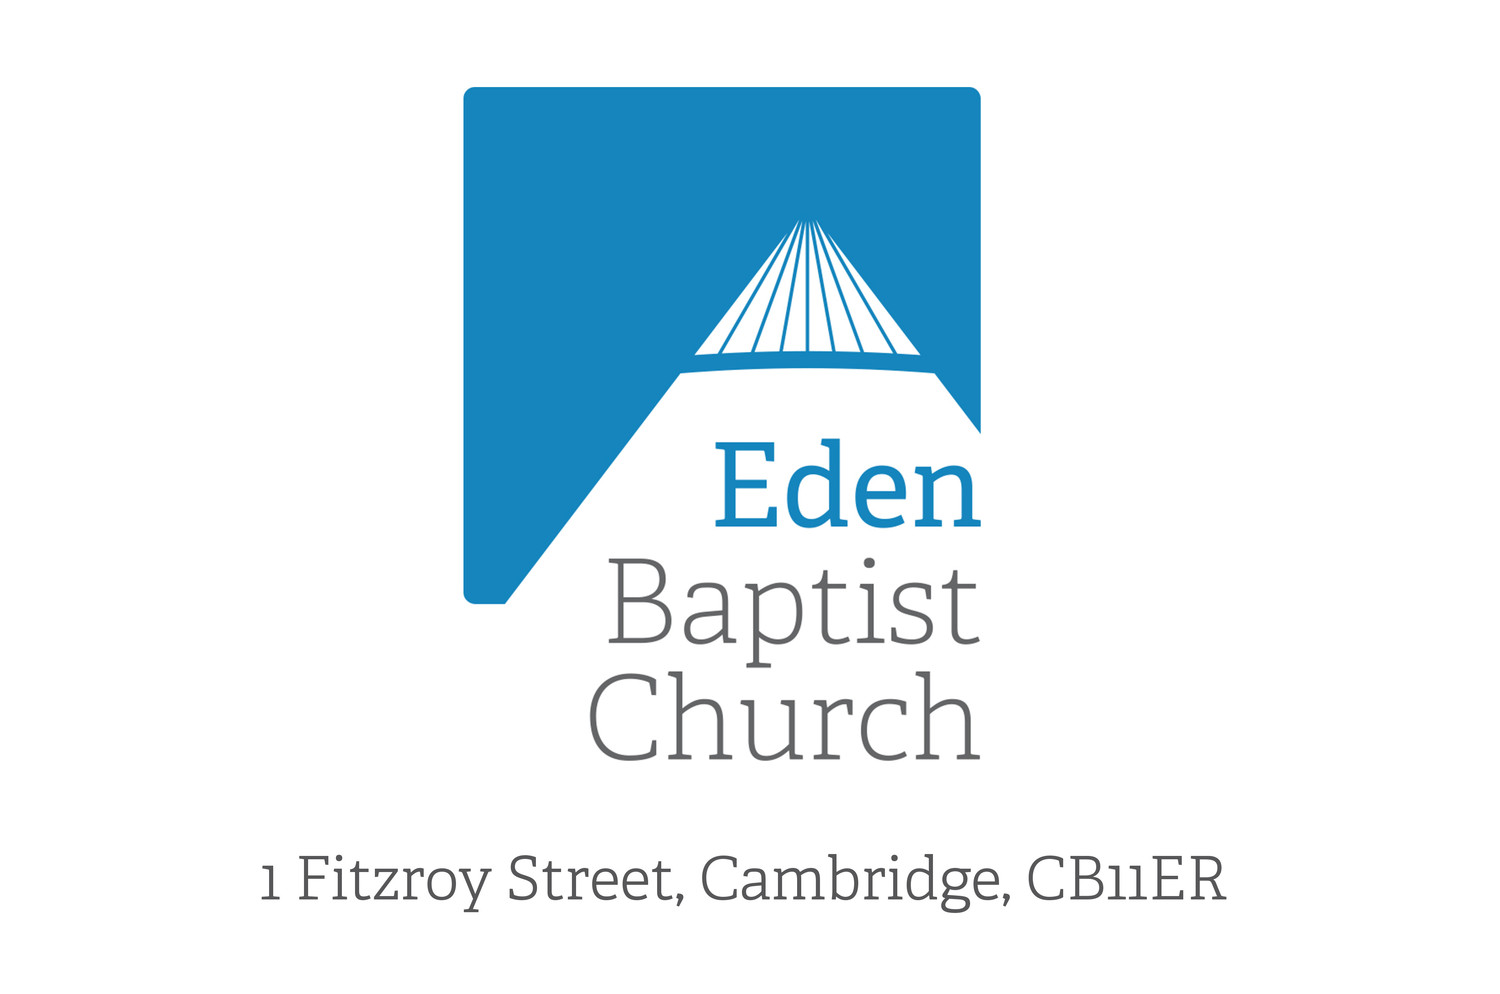 Eden Baptist Church